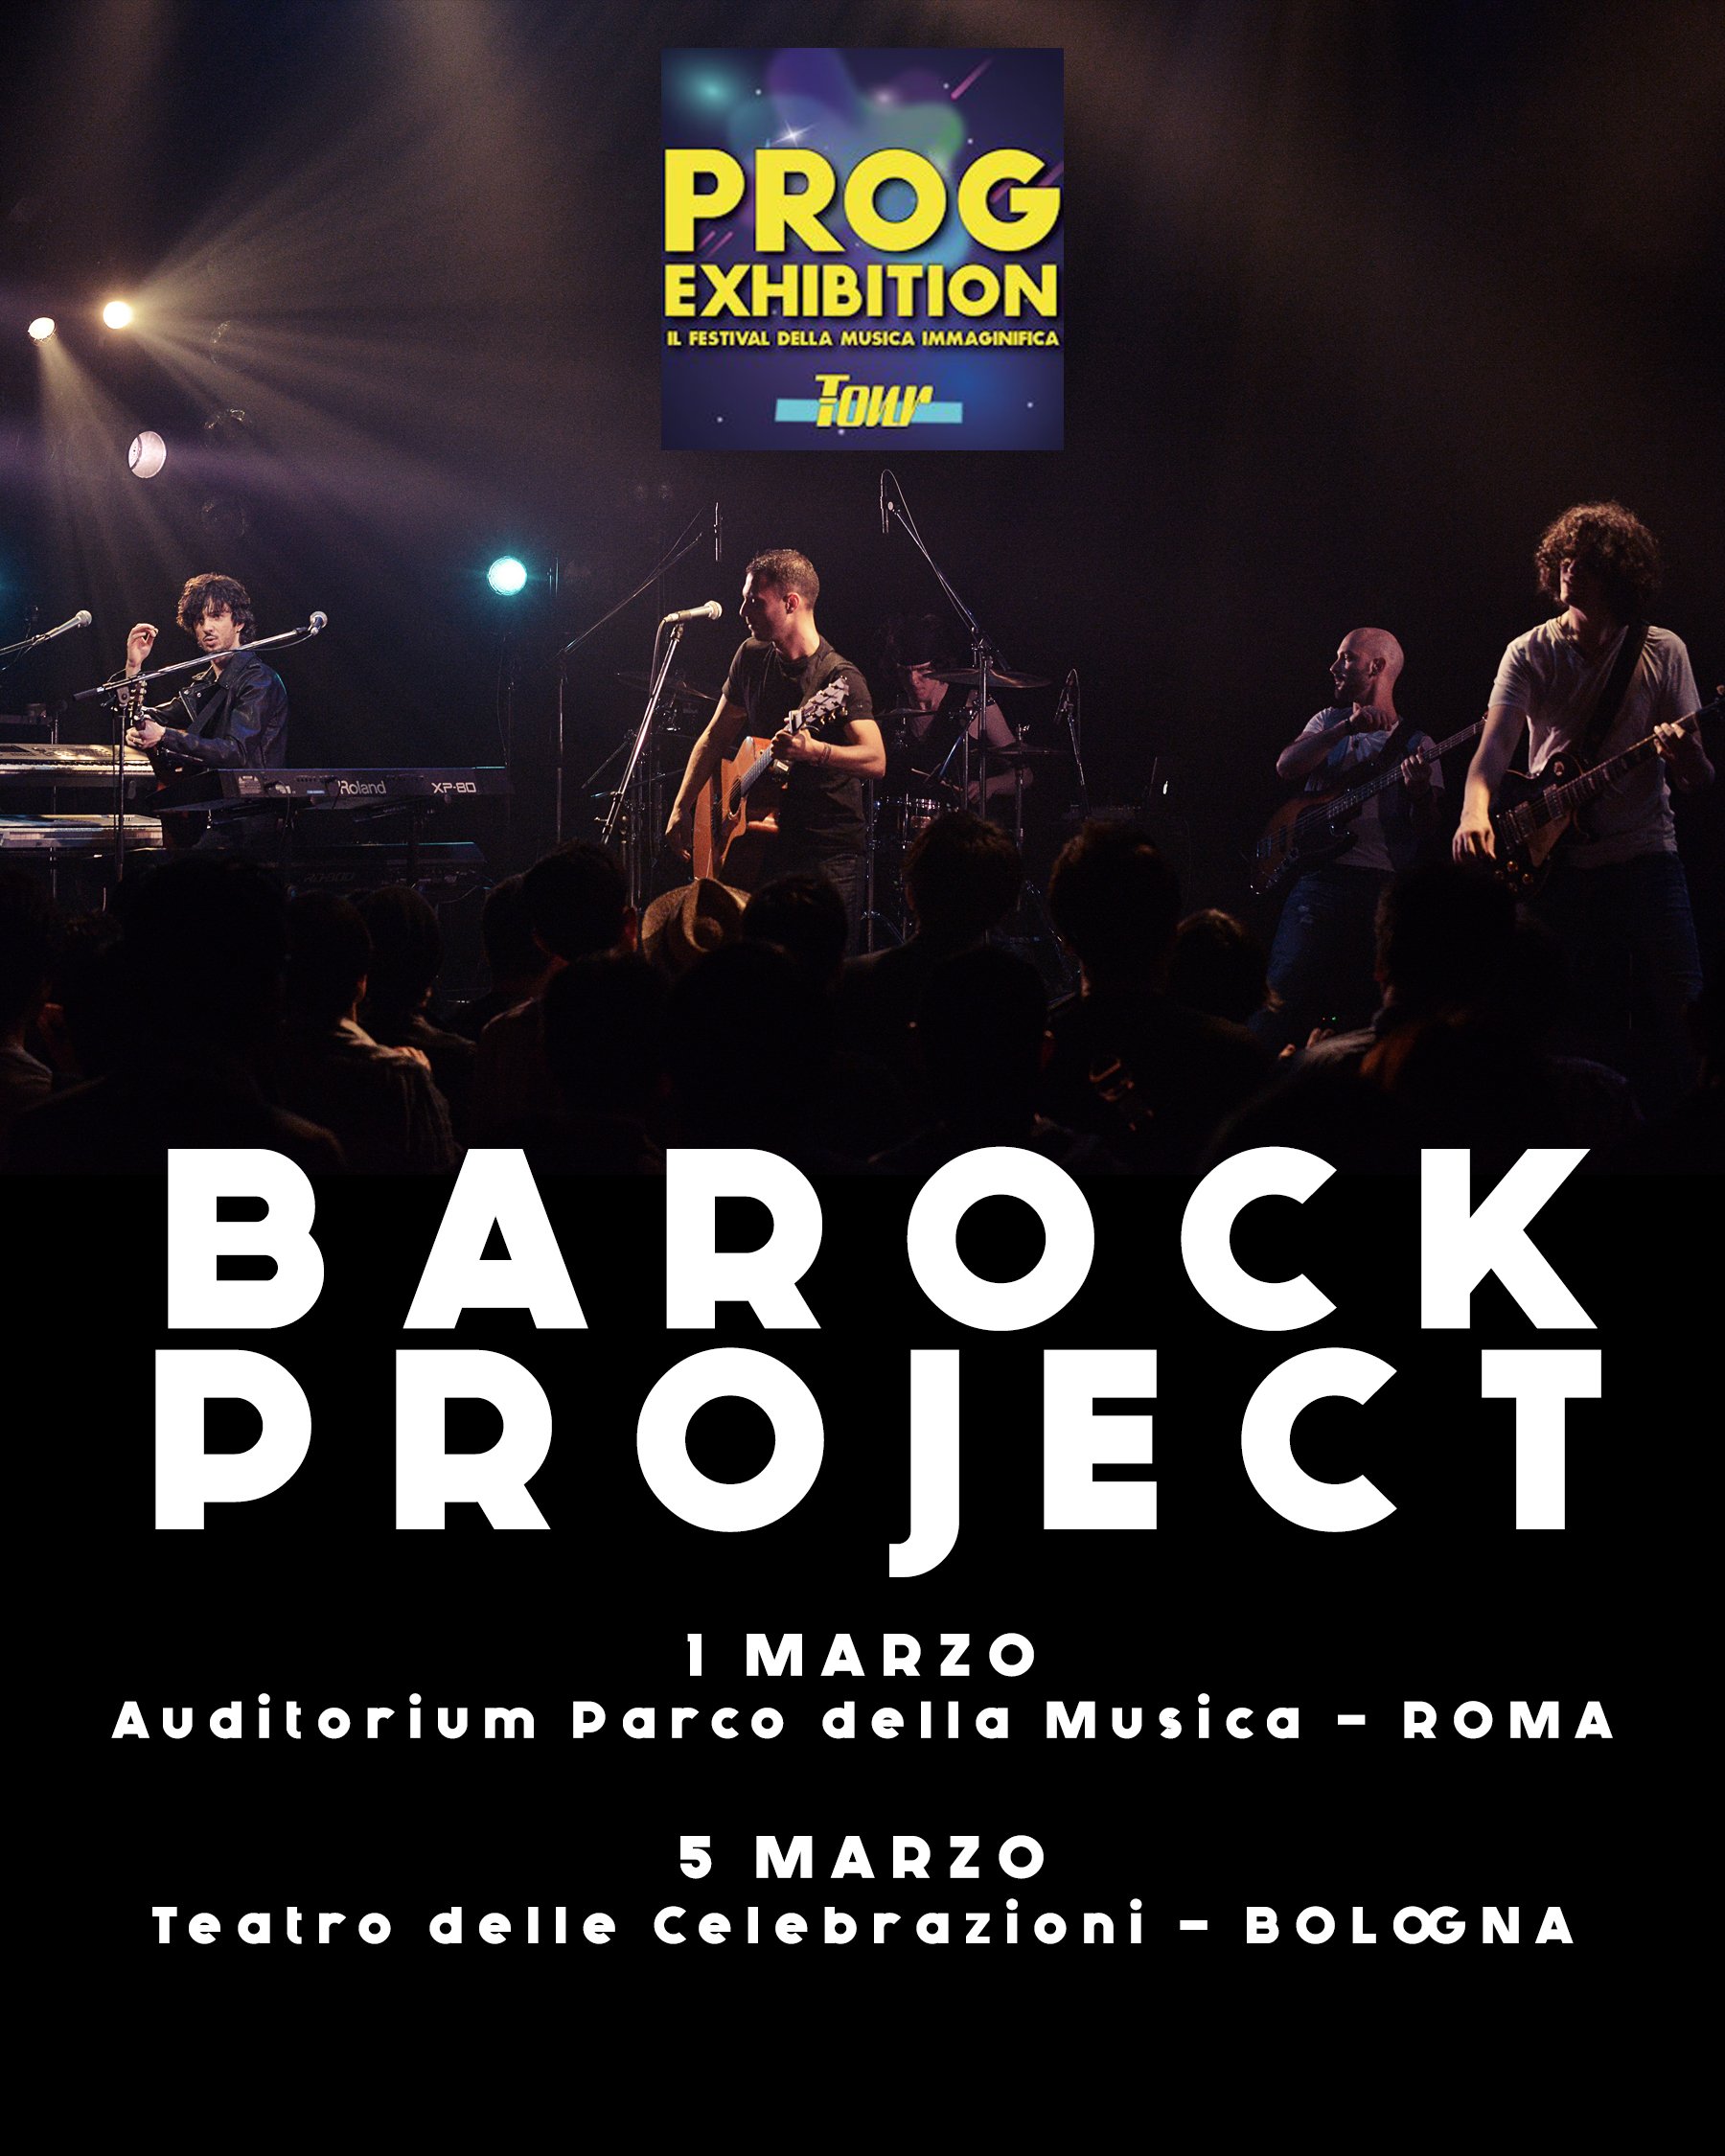 Barock Project - Prog Exhibition 2020 a